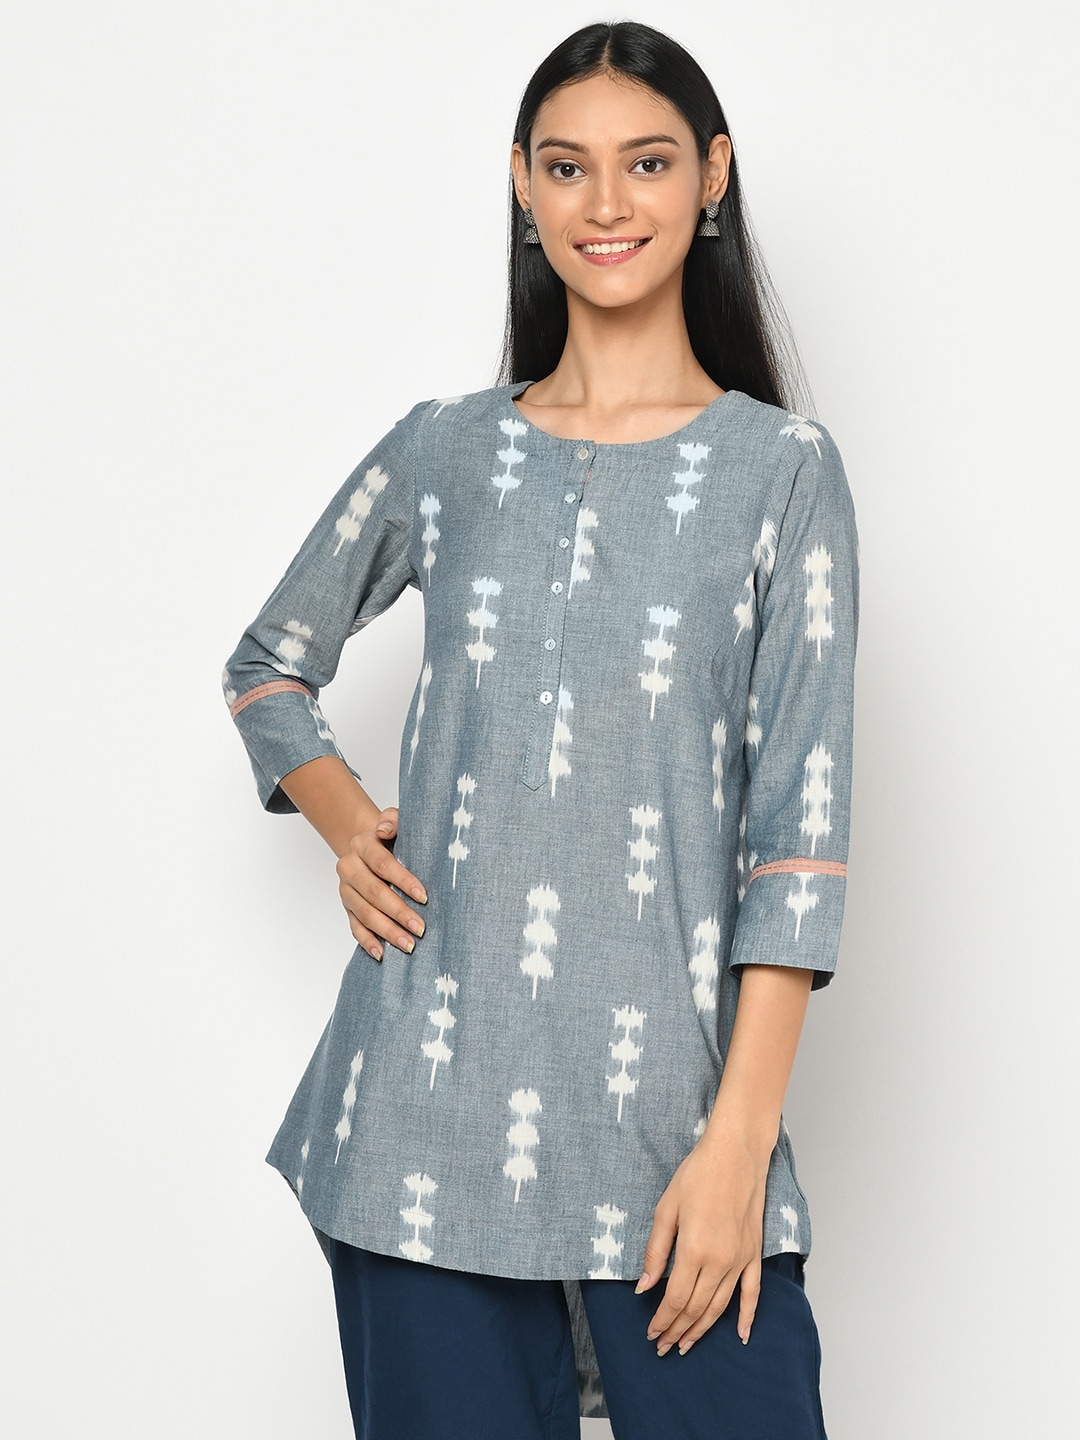 Fabindia Blue & White Ikat Print Cotton Tunic Price in India